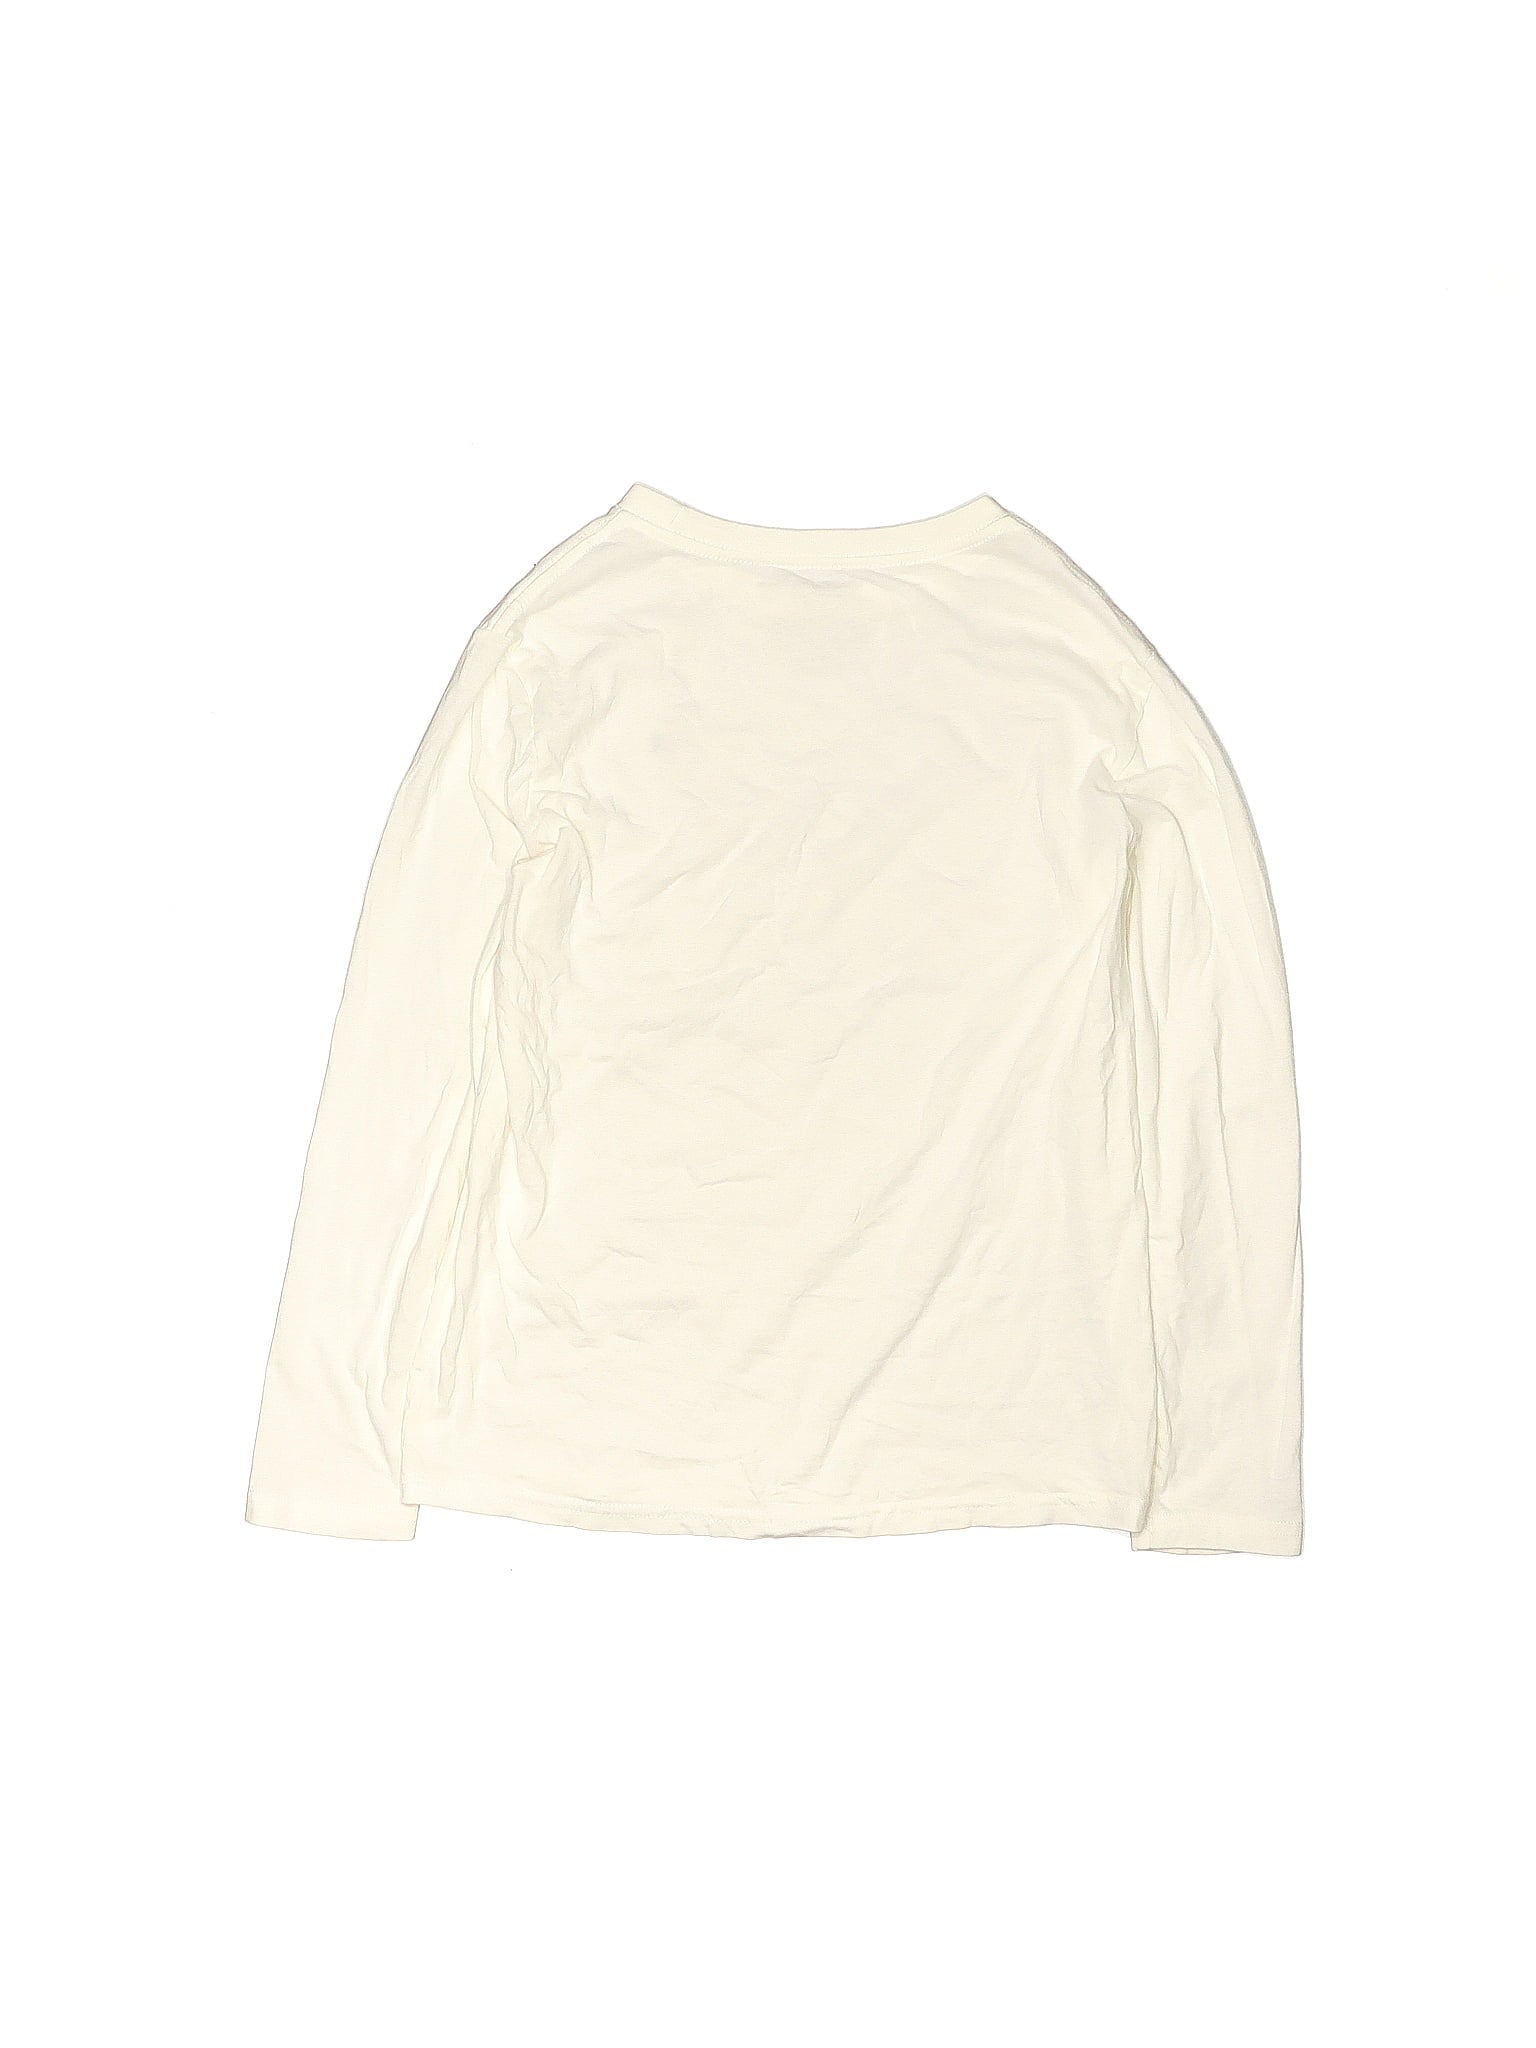 Long Sleeve T Shirt size - M (Kids)